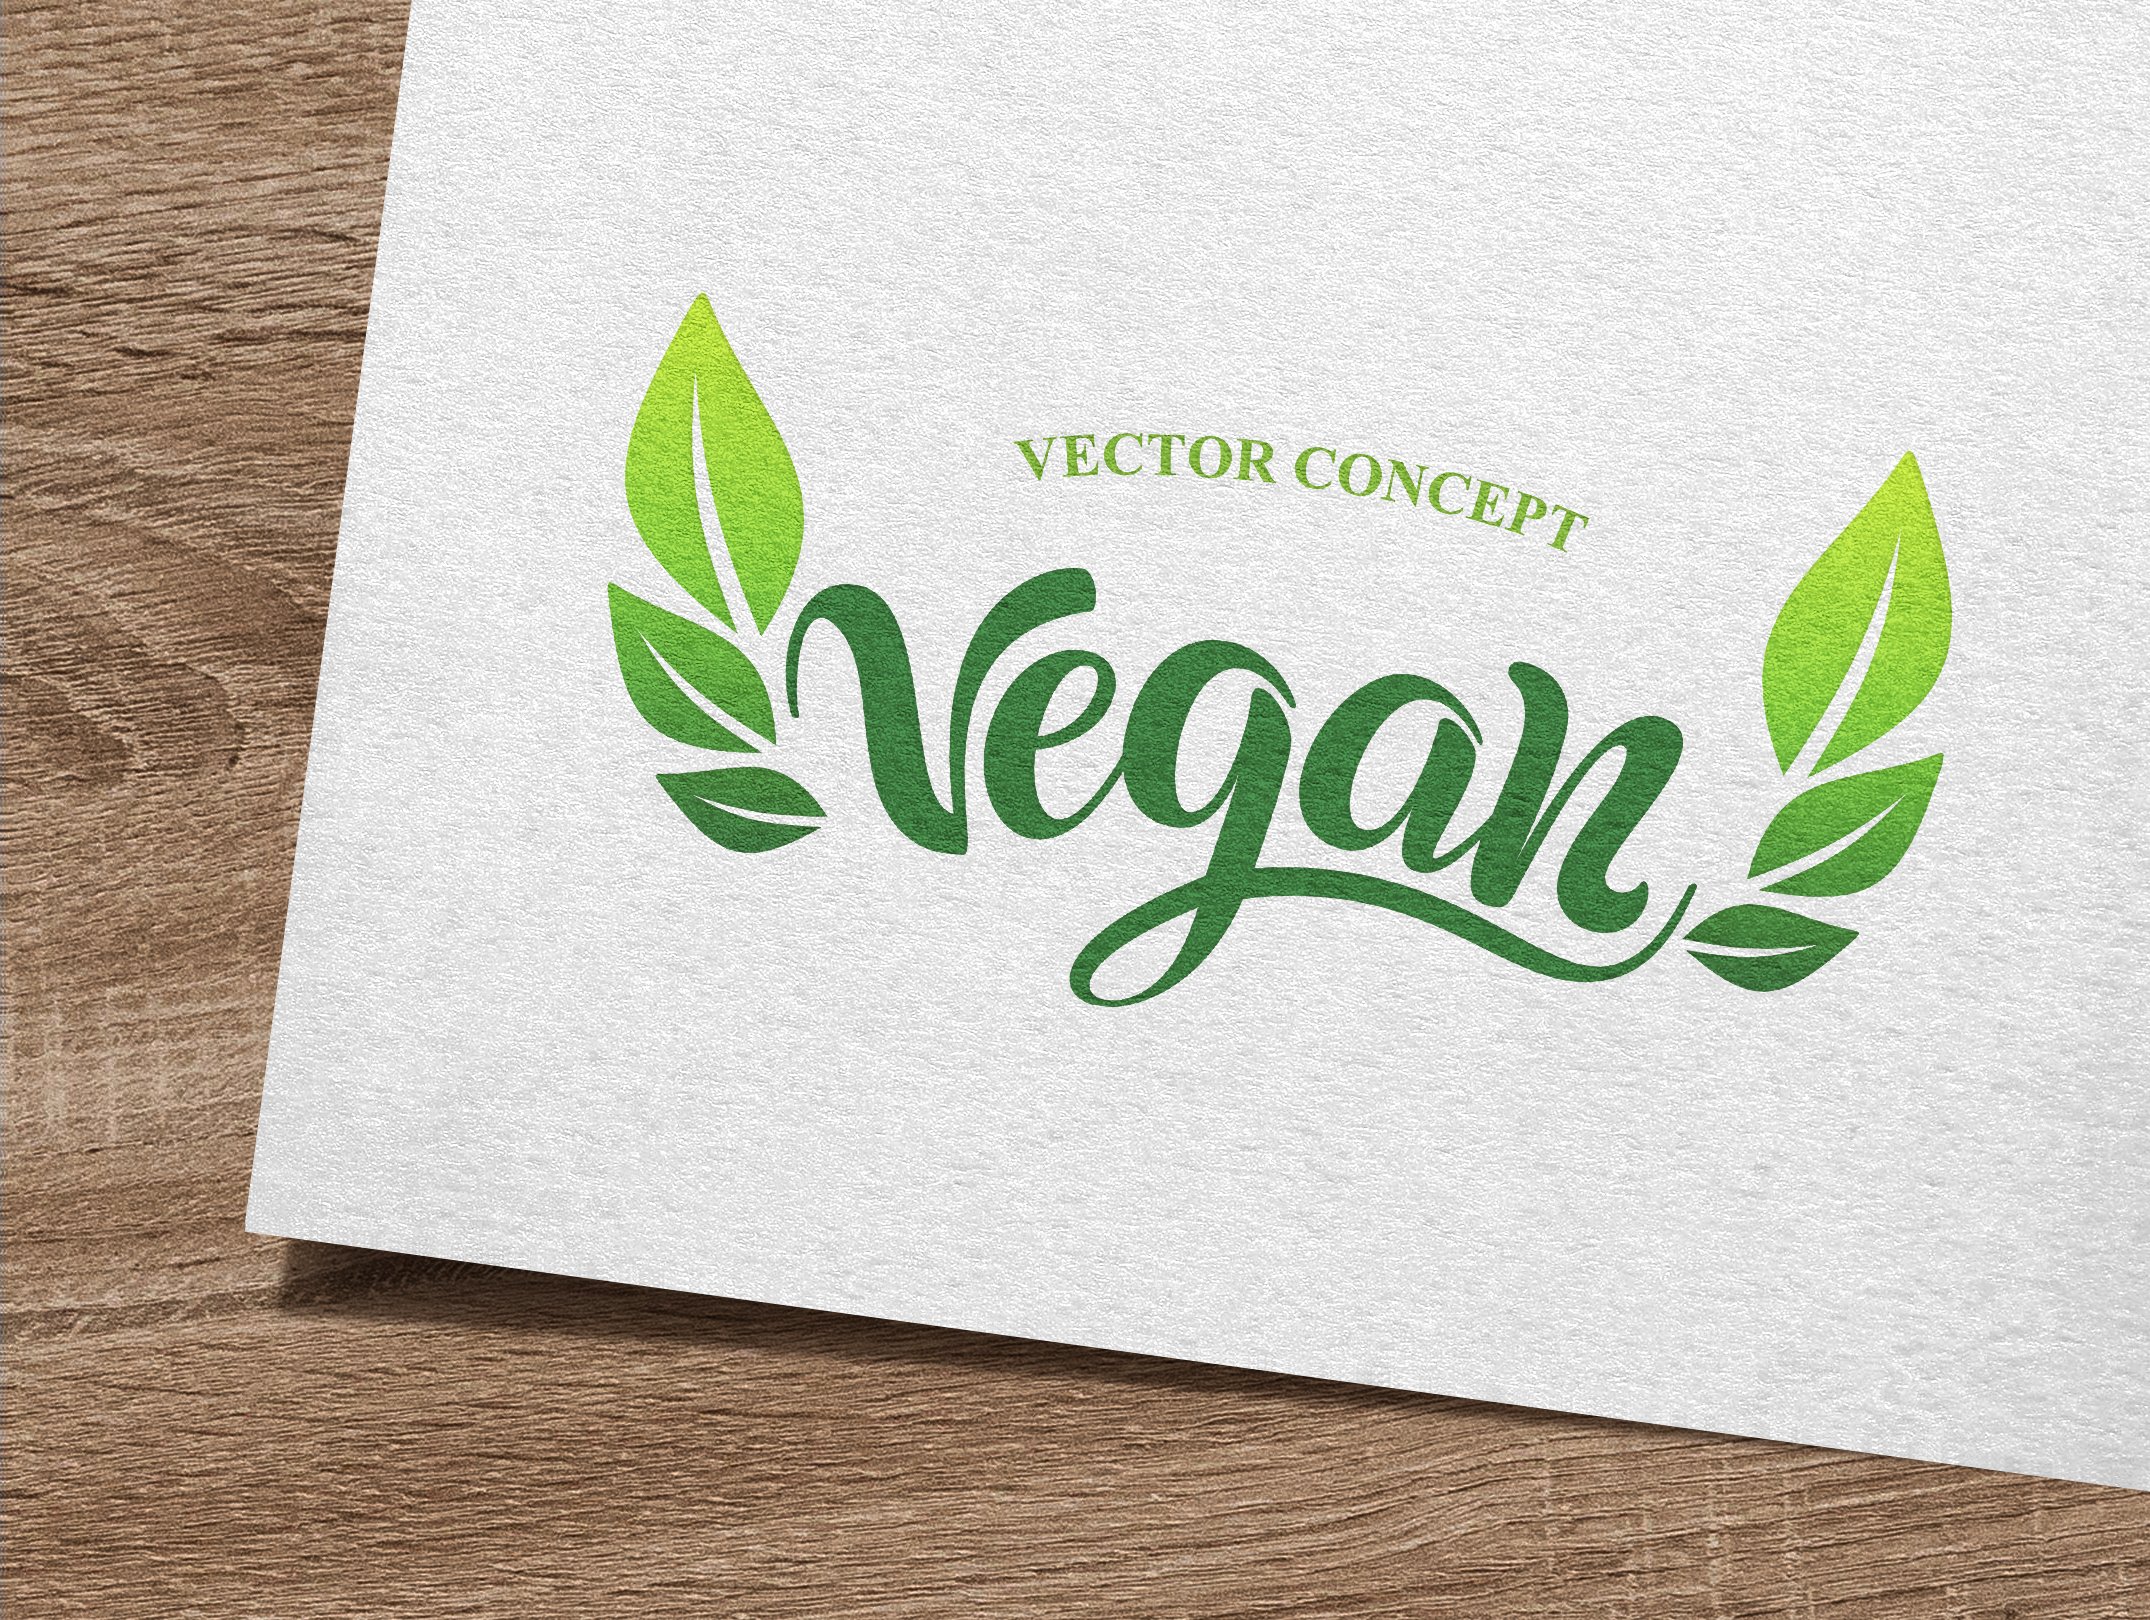 Vegan Logo cover image.